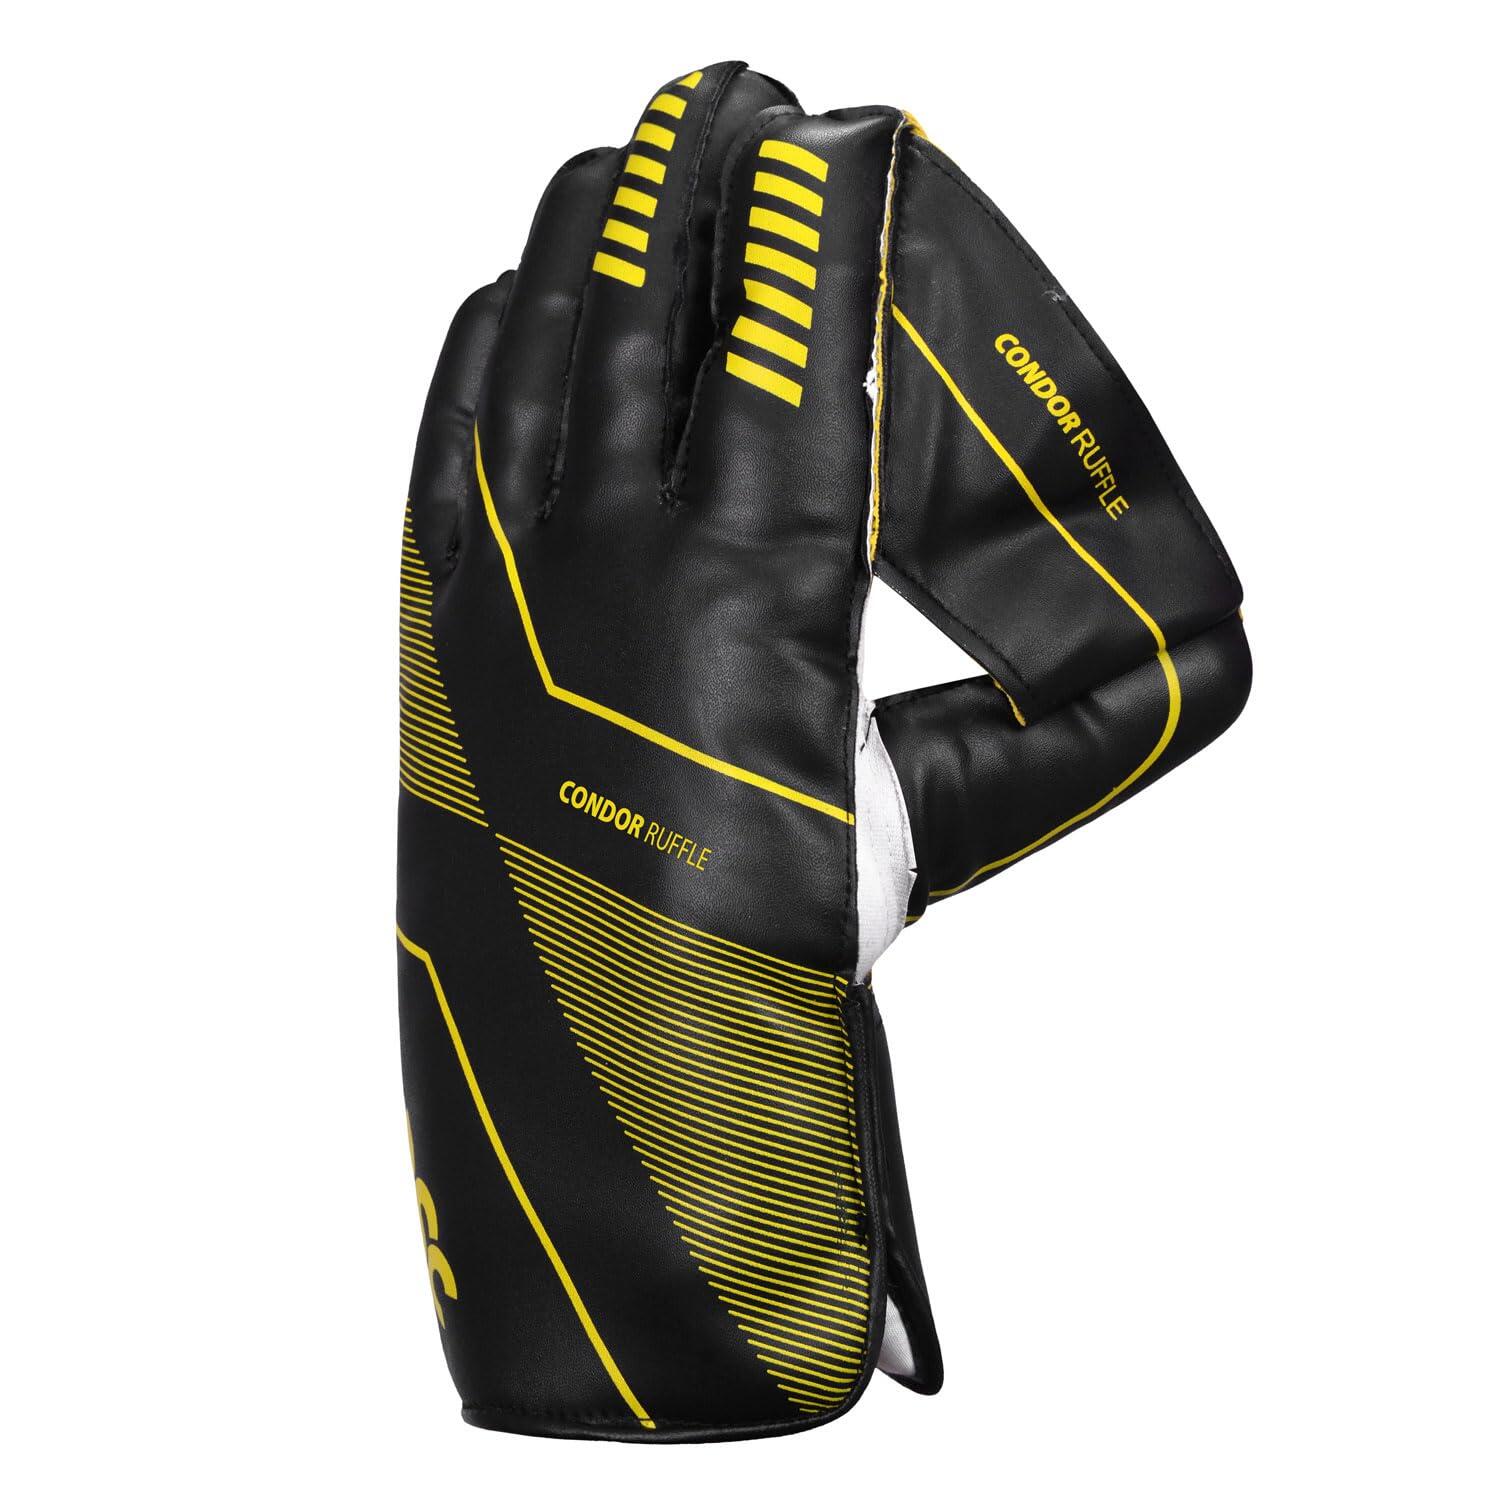 DSC DSC Condor Ruffle Cricket Wicket Keeping Gloves | Material- Leather Ruffle